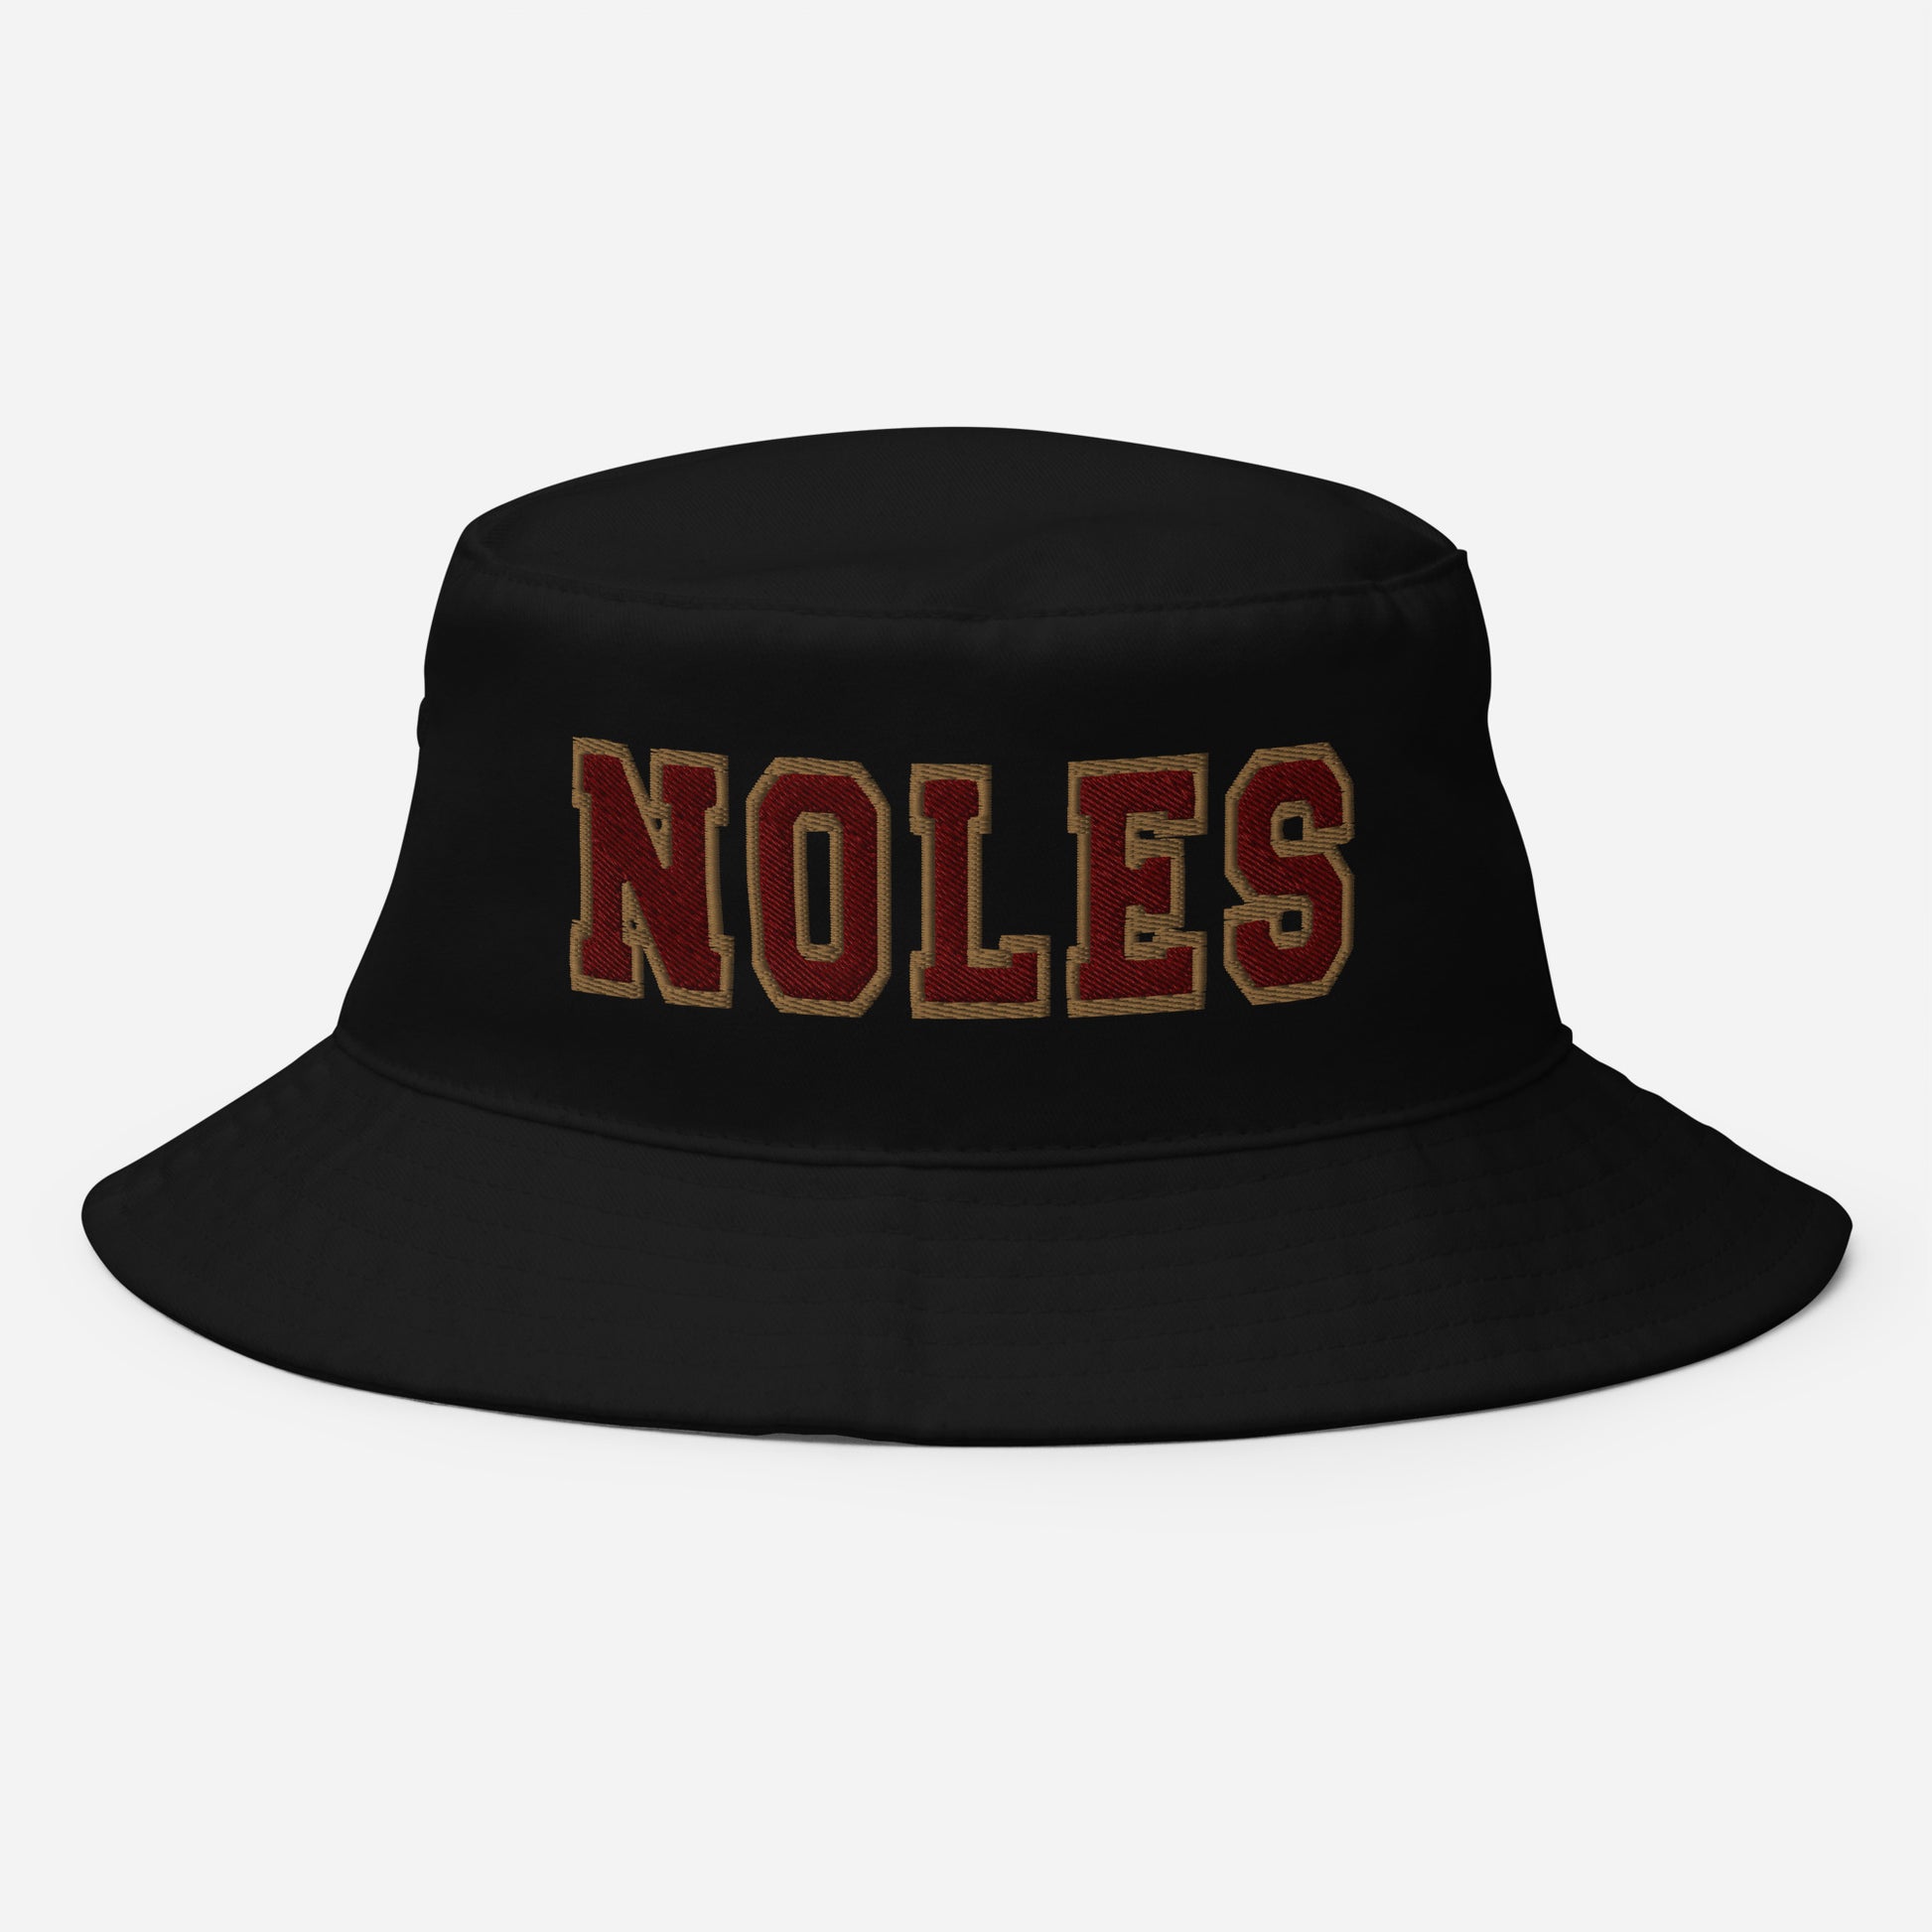 Noles Bucket Hat Florida State Cap - Hialeah Hat Mart